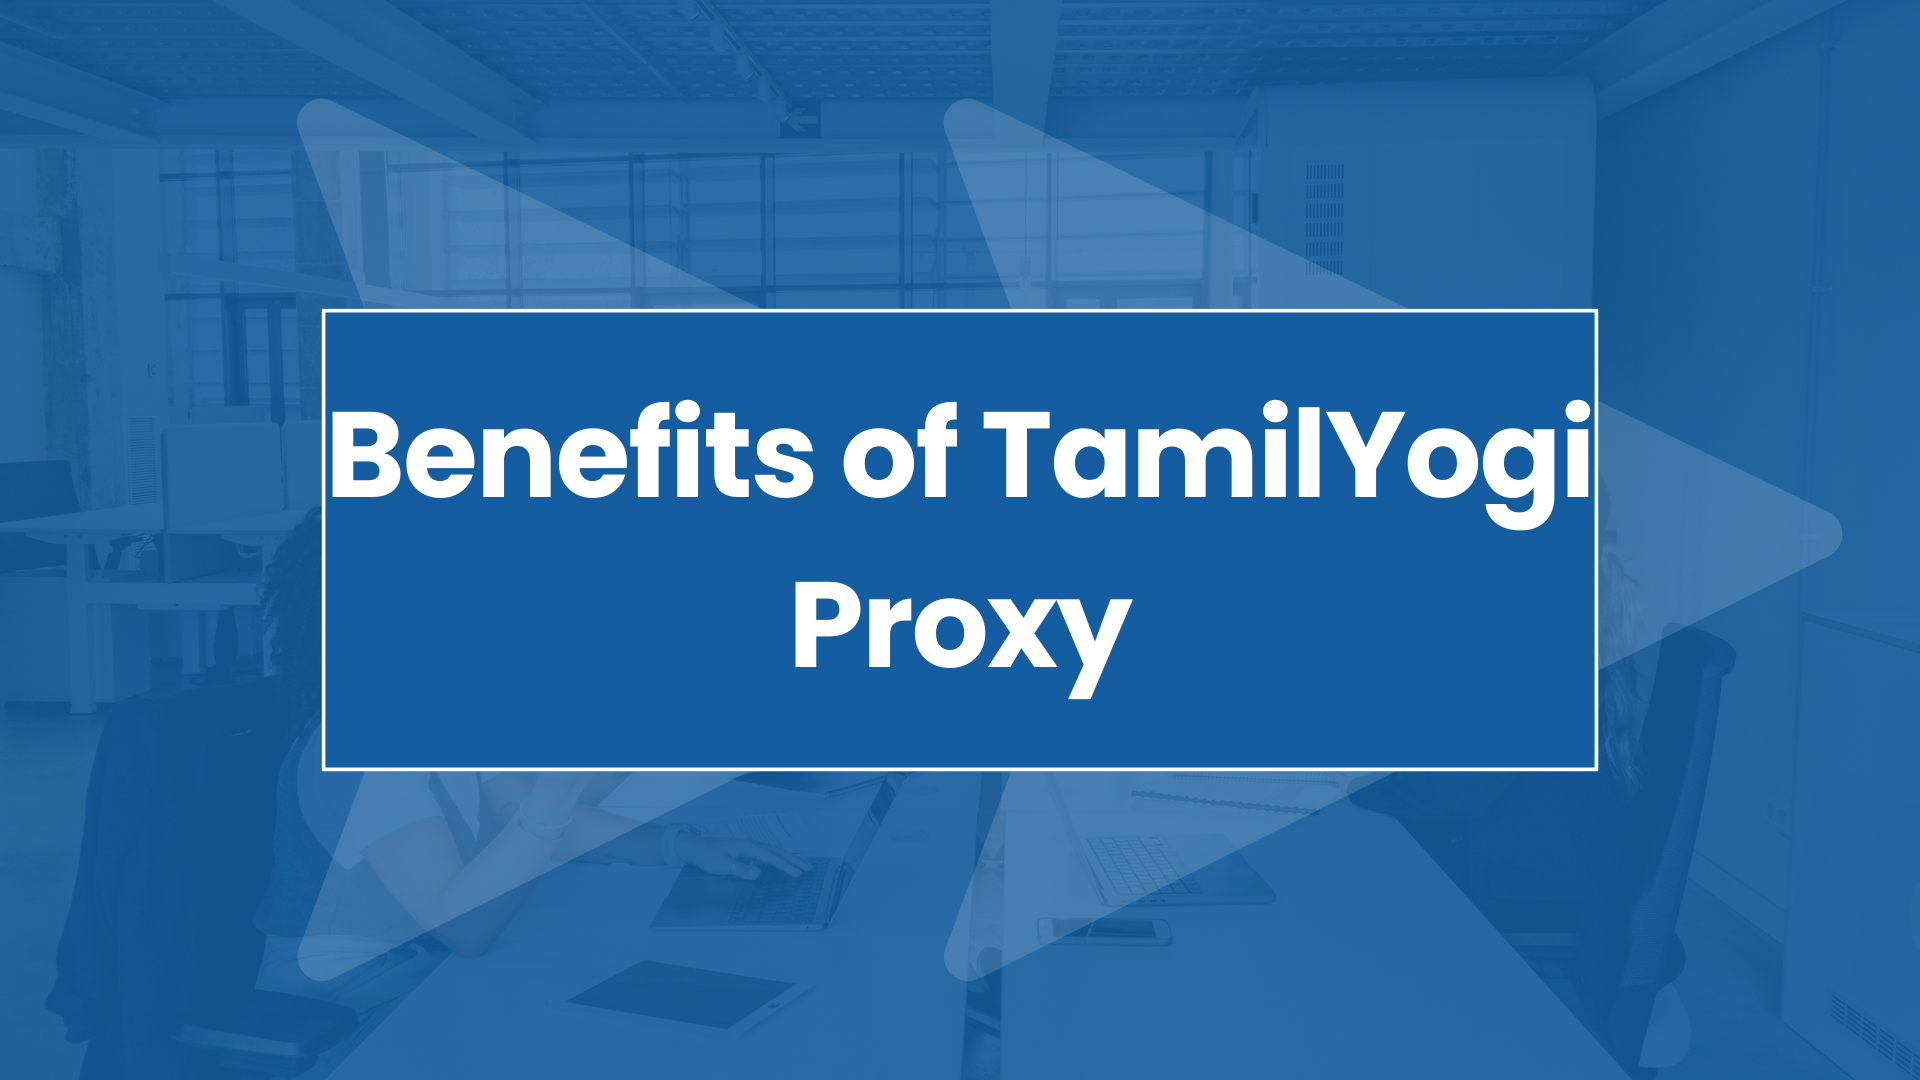 Benefits of TamilYogi Proxy